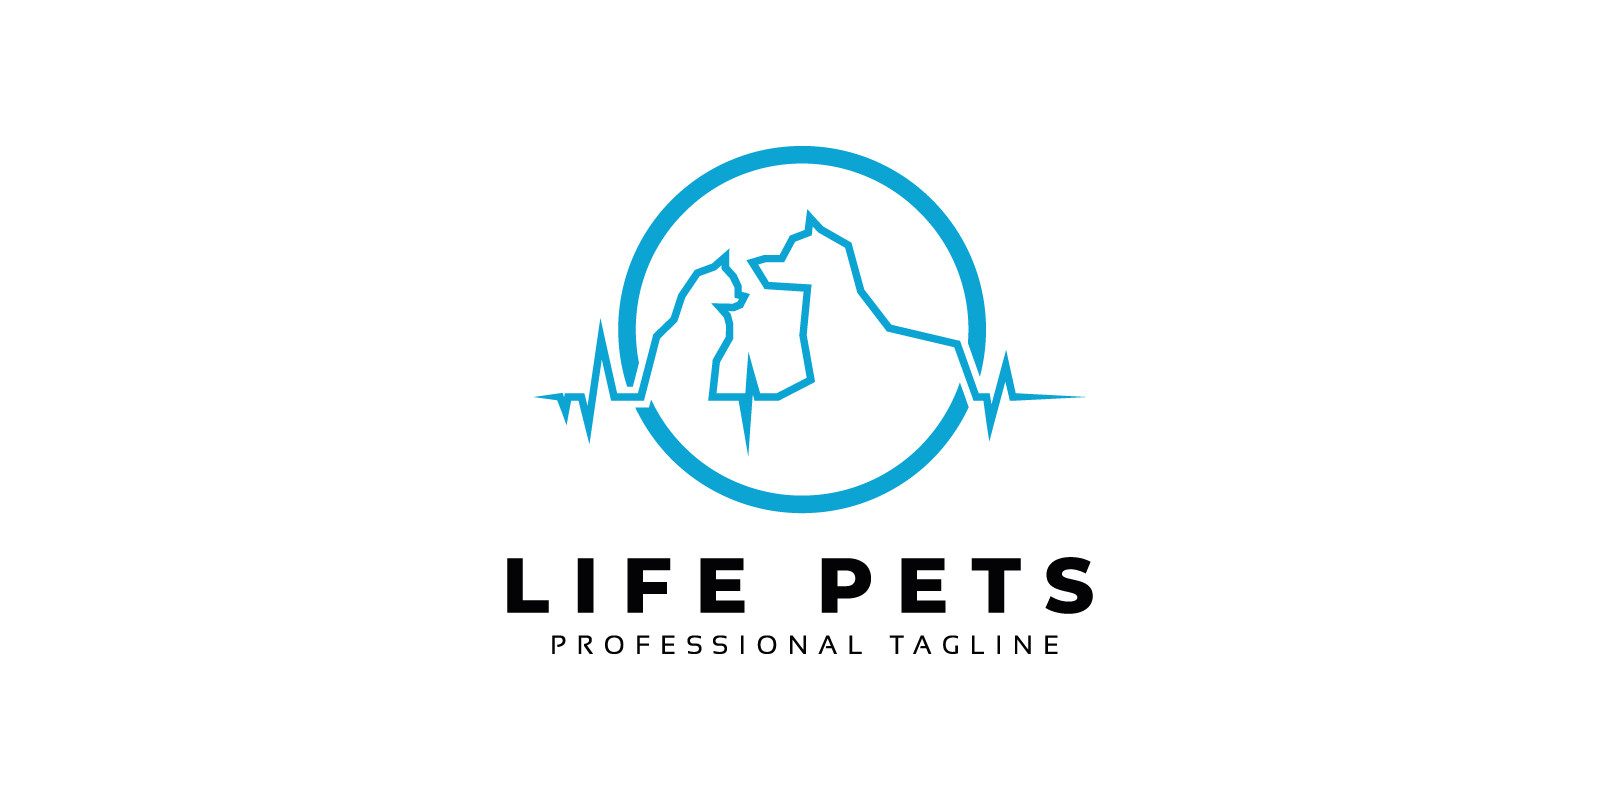 Premium Pet логотип. Petlife лого. Лайф Медикал логотип. Pets Life logo. Pet life 2